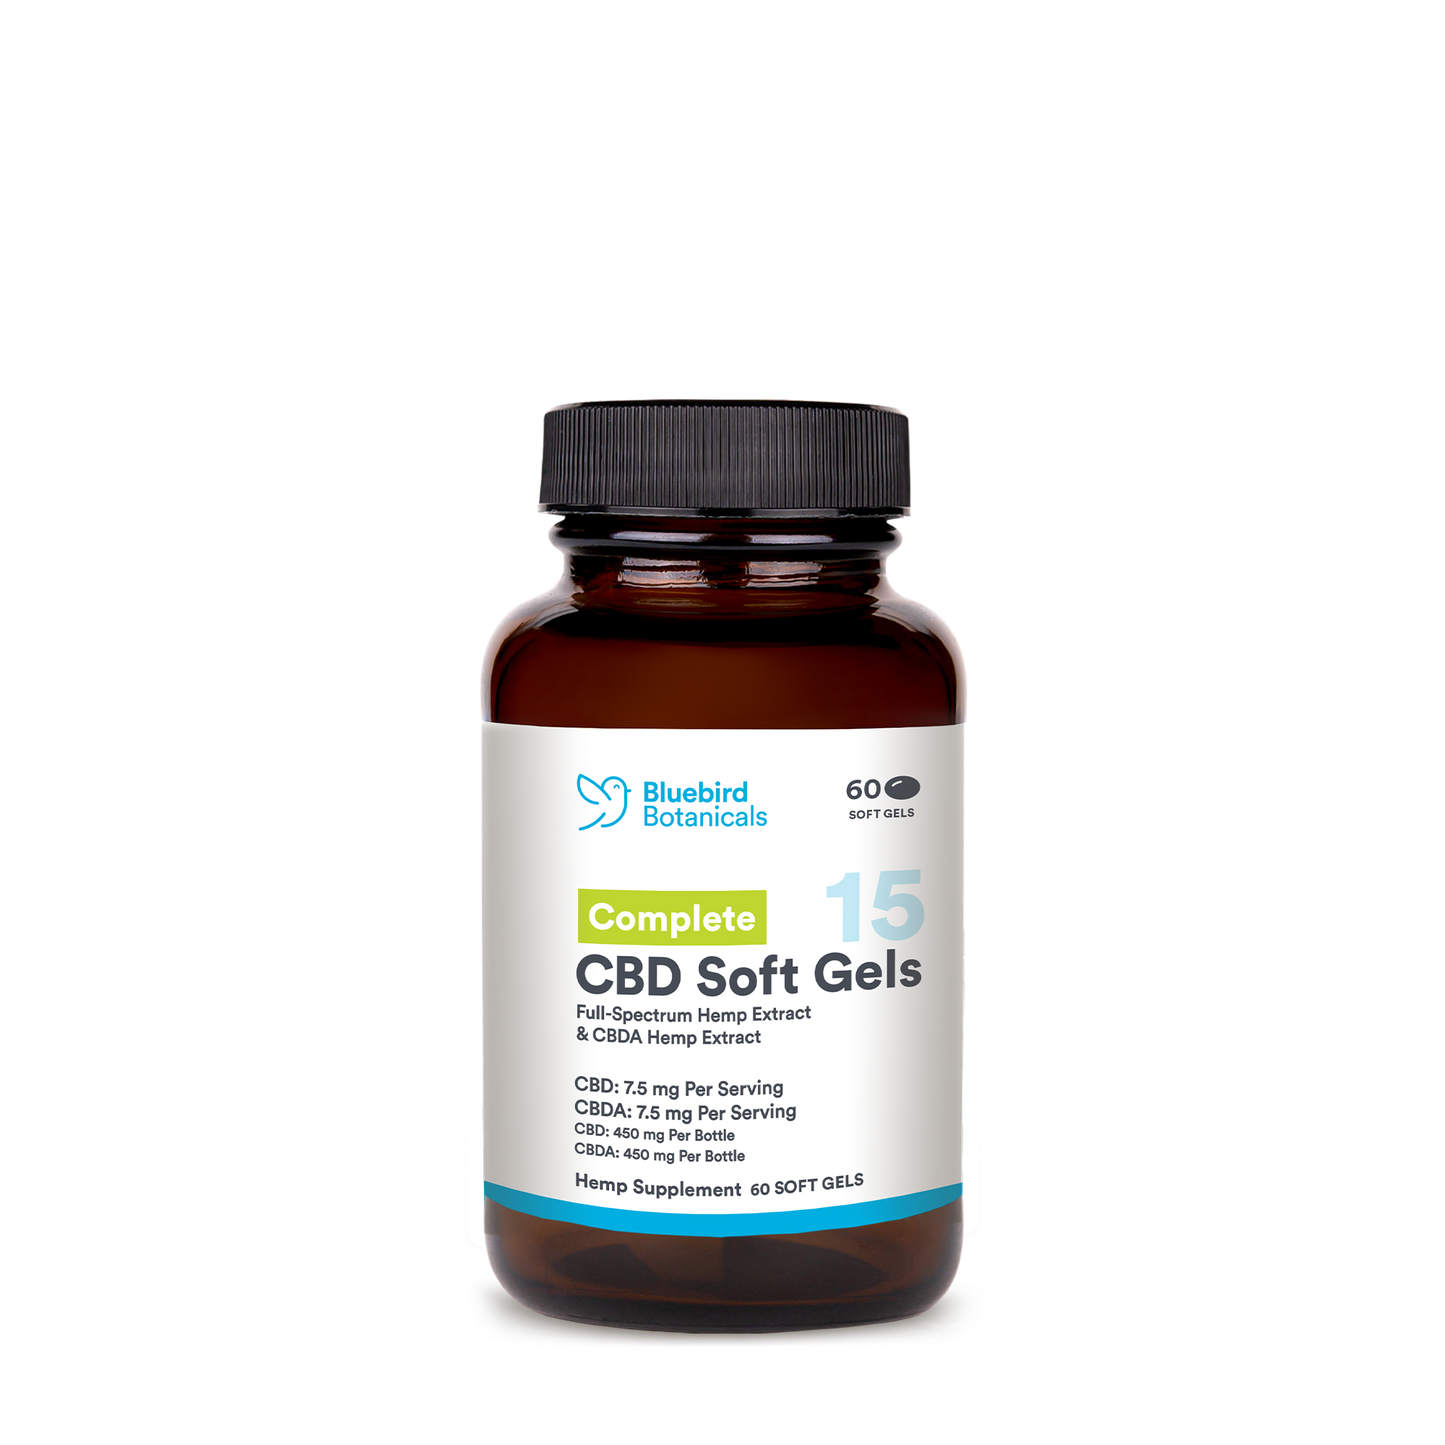 Complete CBDA + CBD Oil Soft Gels  Bluebird Botanicals 60ct - $59.95  